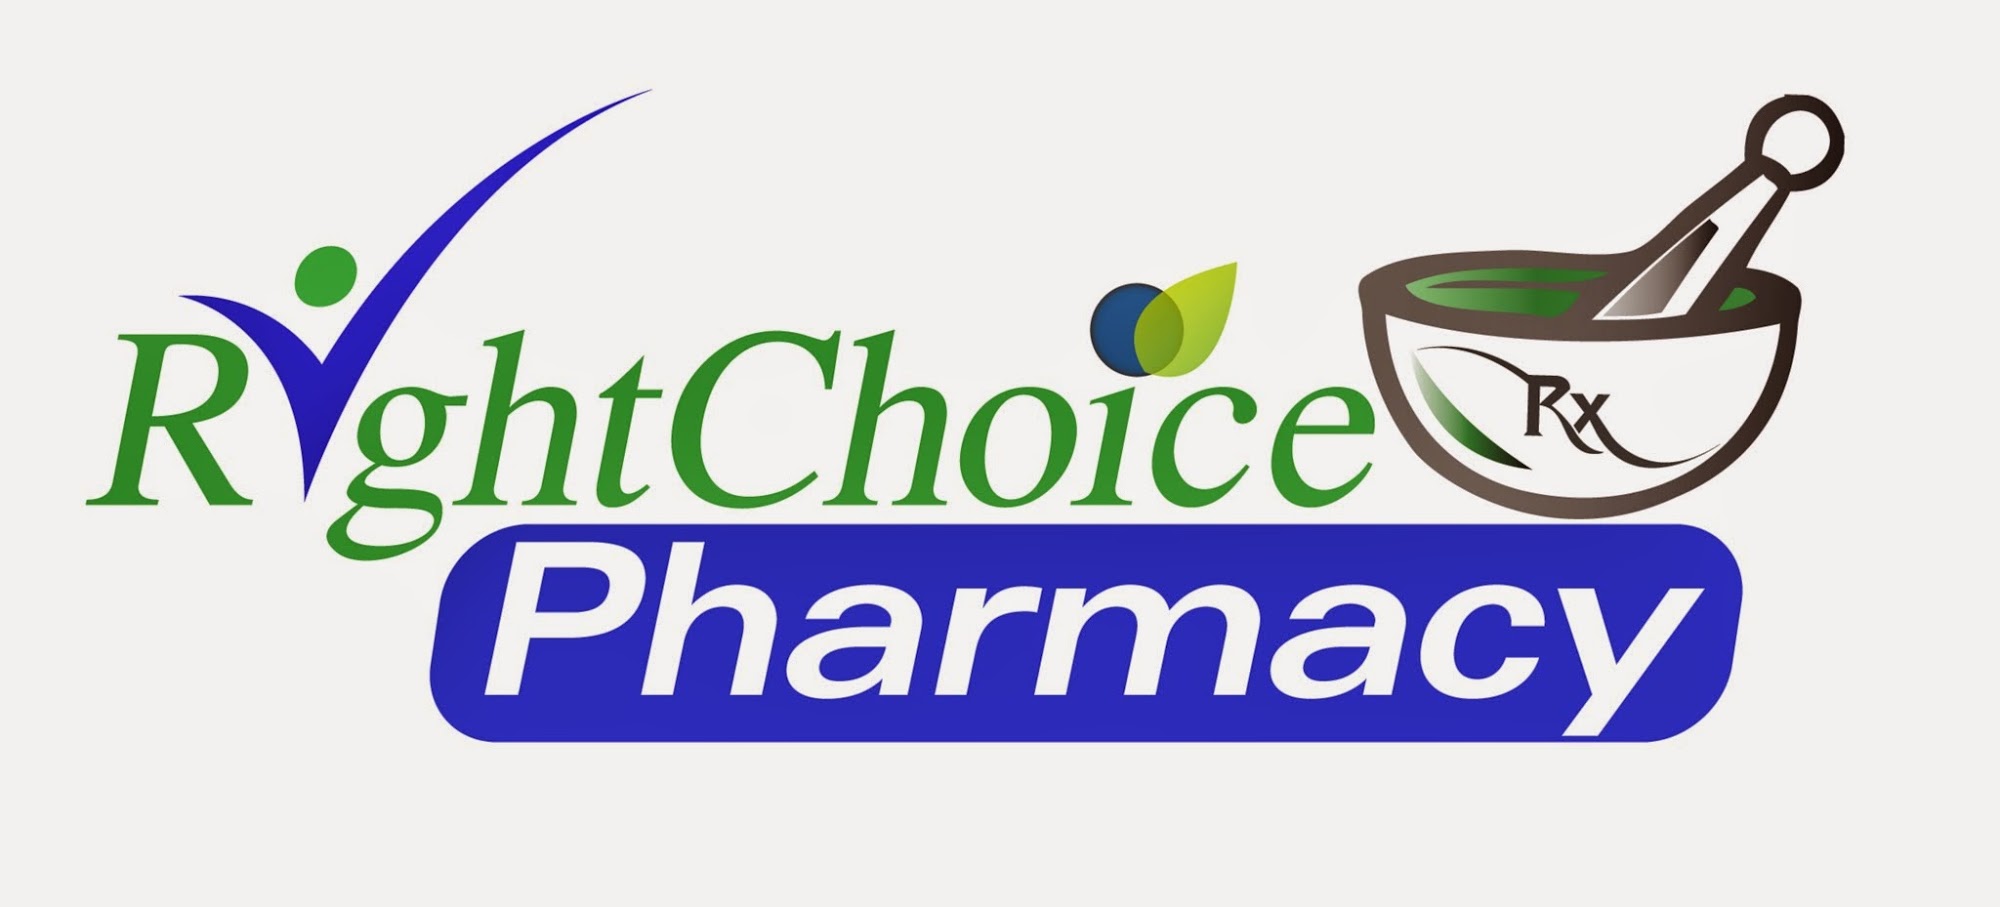 RightChoice Pharmacy & Drug Store